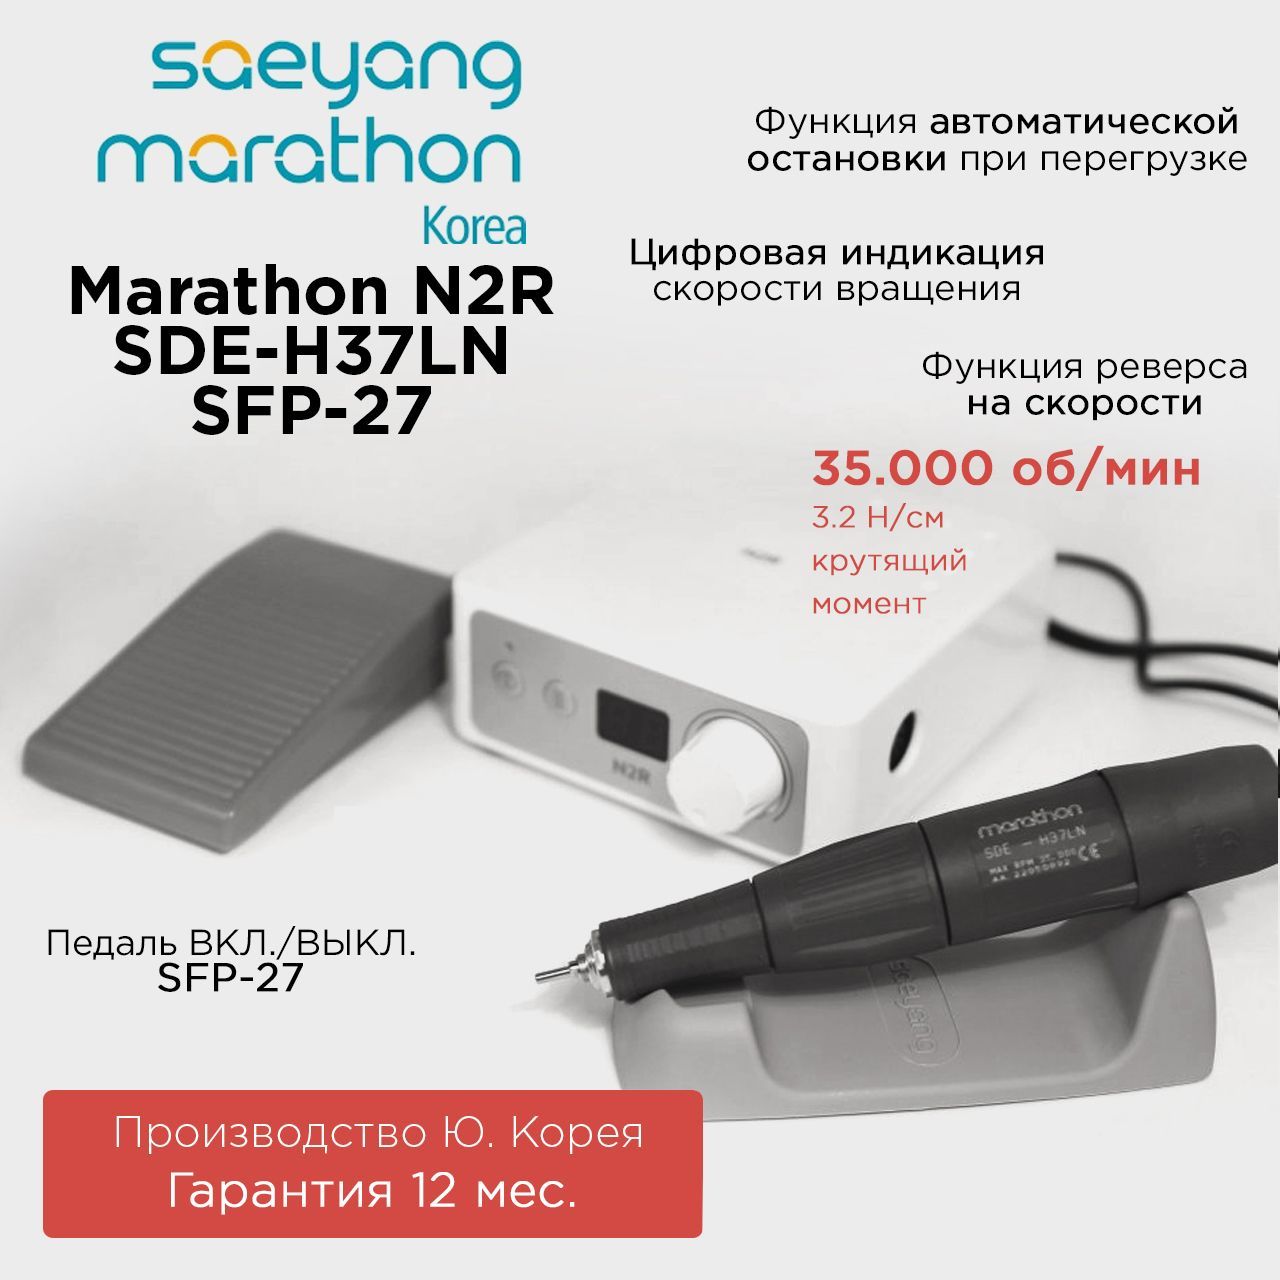 Аппарат для маникюра Marathon N2R SDE-H37LN с педалью SFP-27 аппарат для маникюра marathon n2r sde h37ln без педали